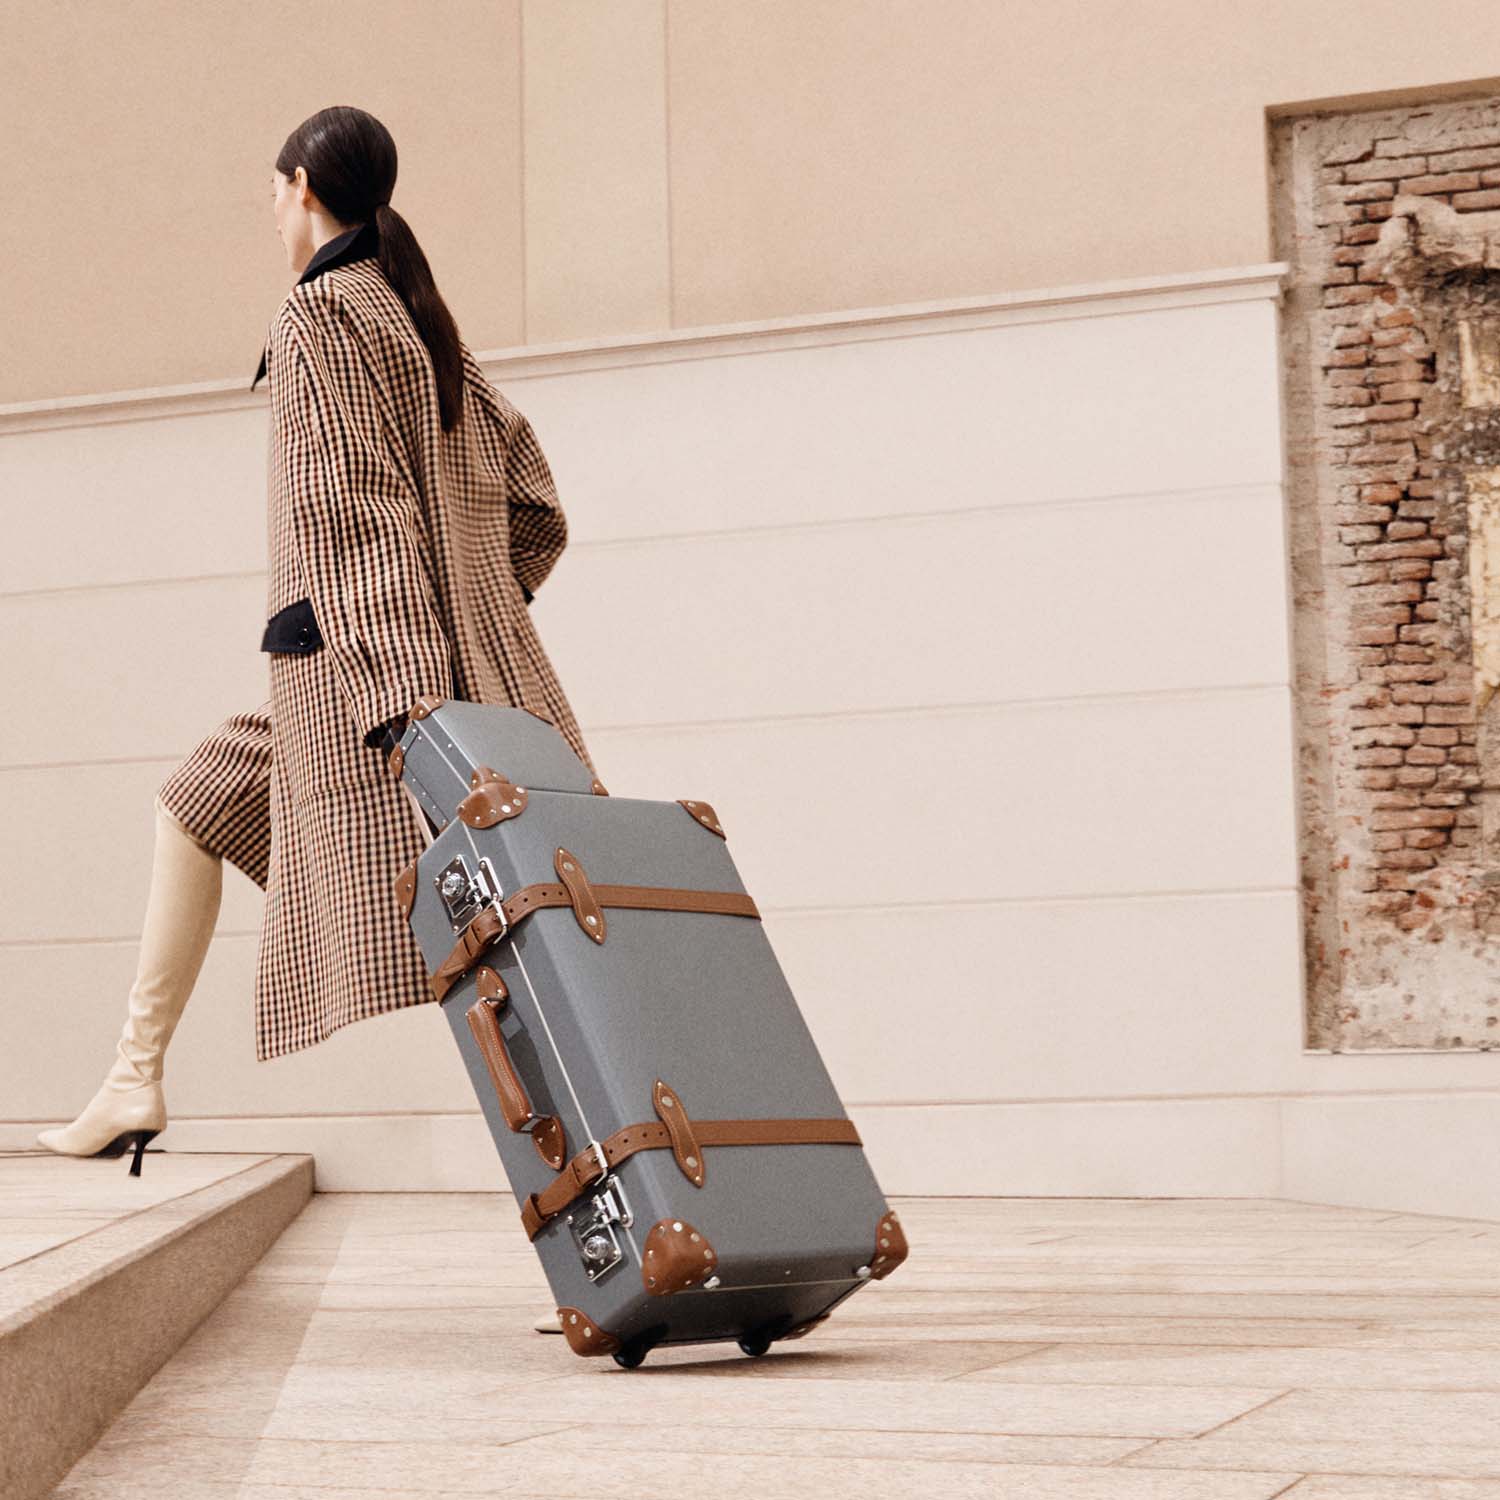 Buy Quality Luxury Luggage For International Travel 